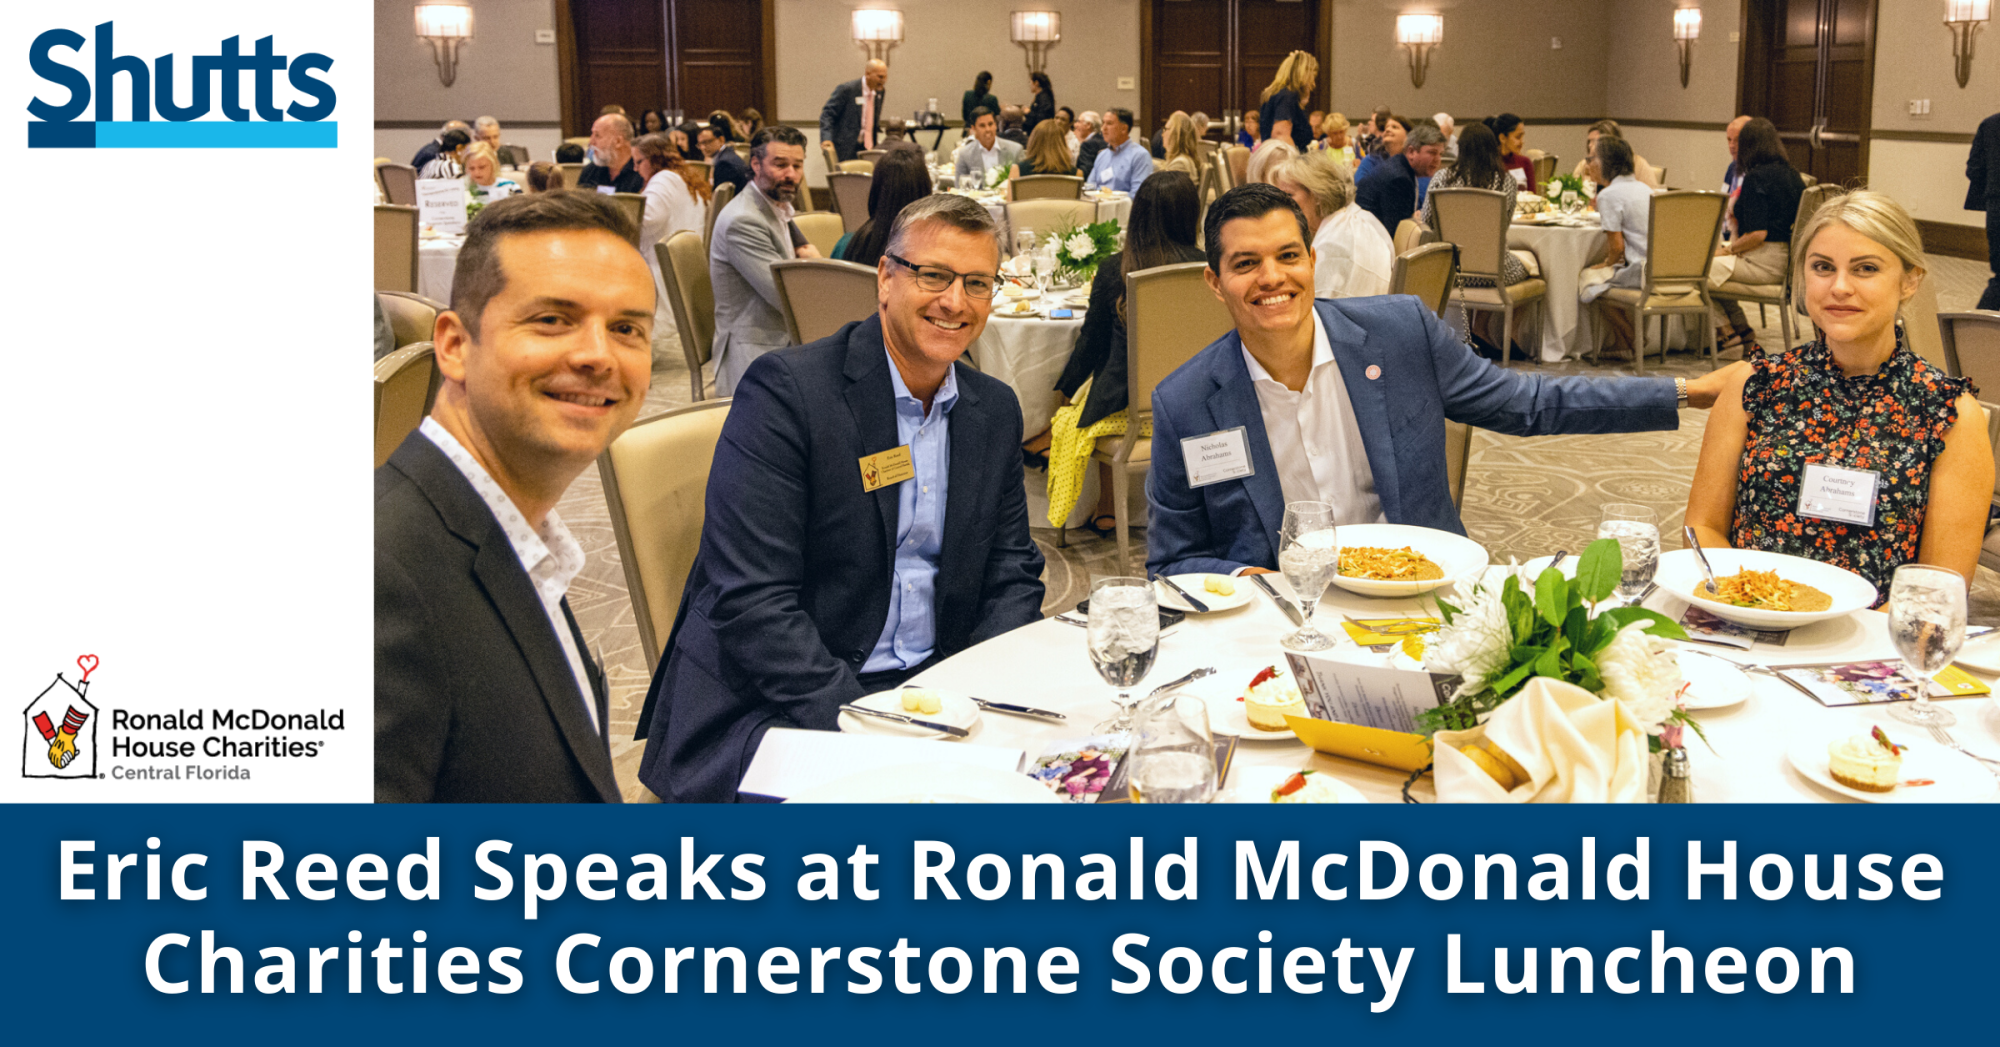 Eric Reed Speaks at Ronald McDonald House charities Cornerstone Society Luncheon